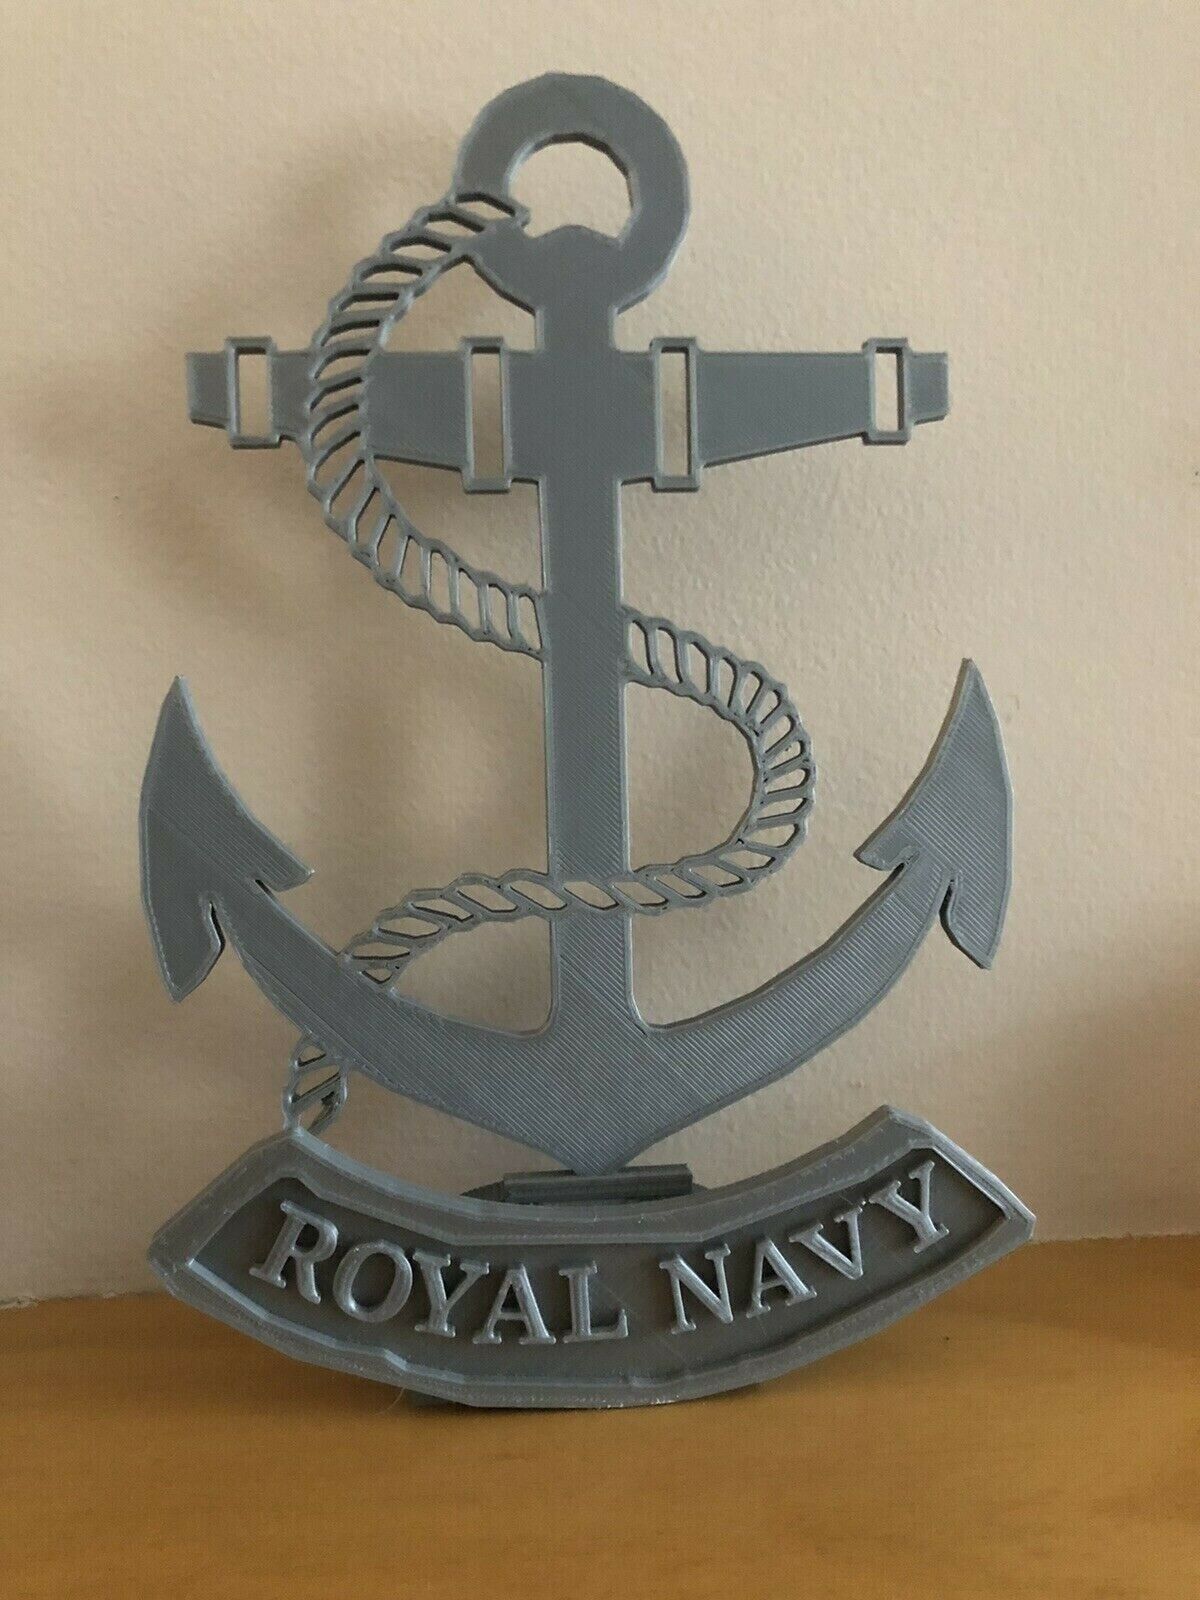 Royal Navy Anchor badge silhouette, Ensignia, Emblem, Desktop ornament